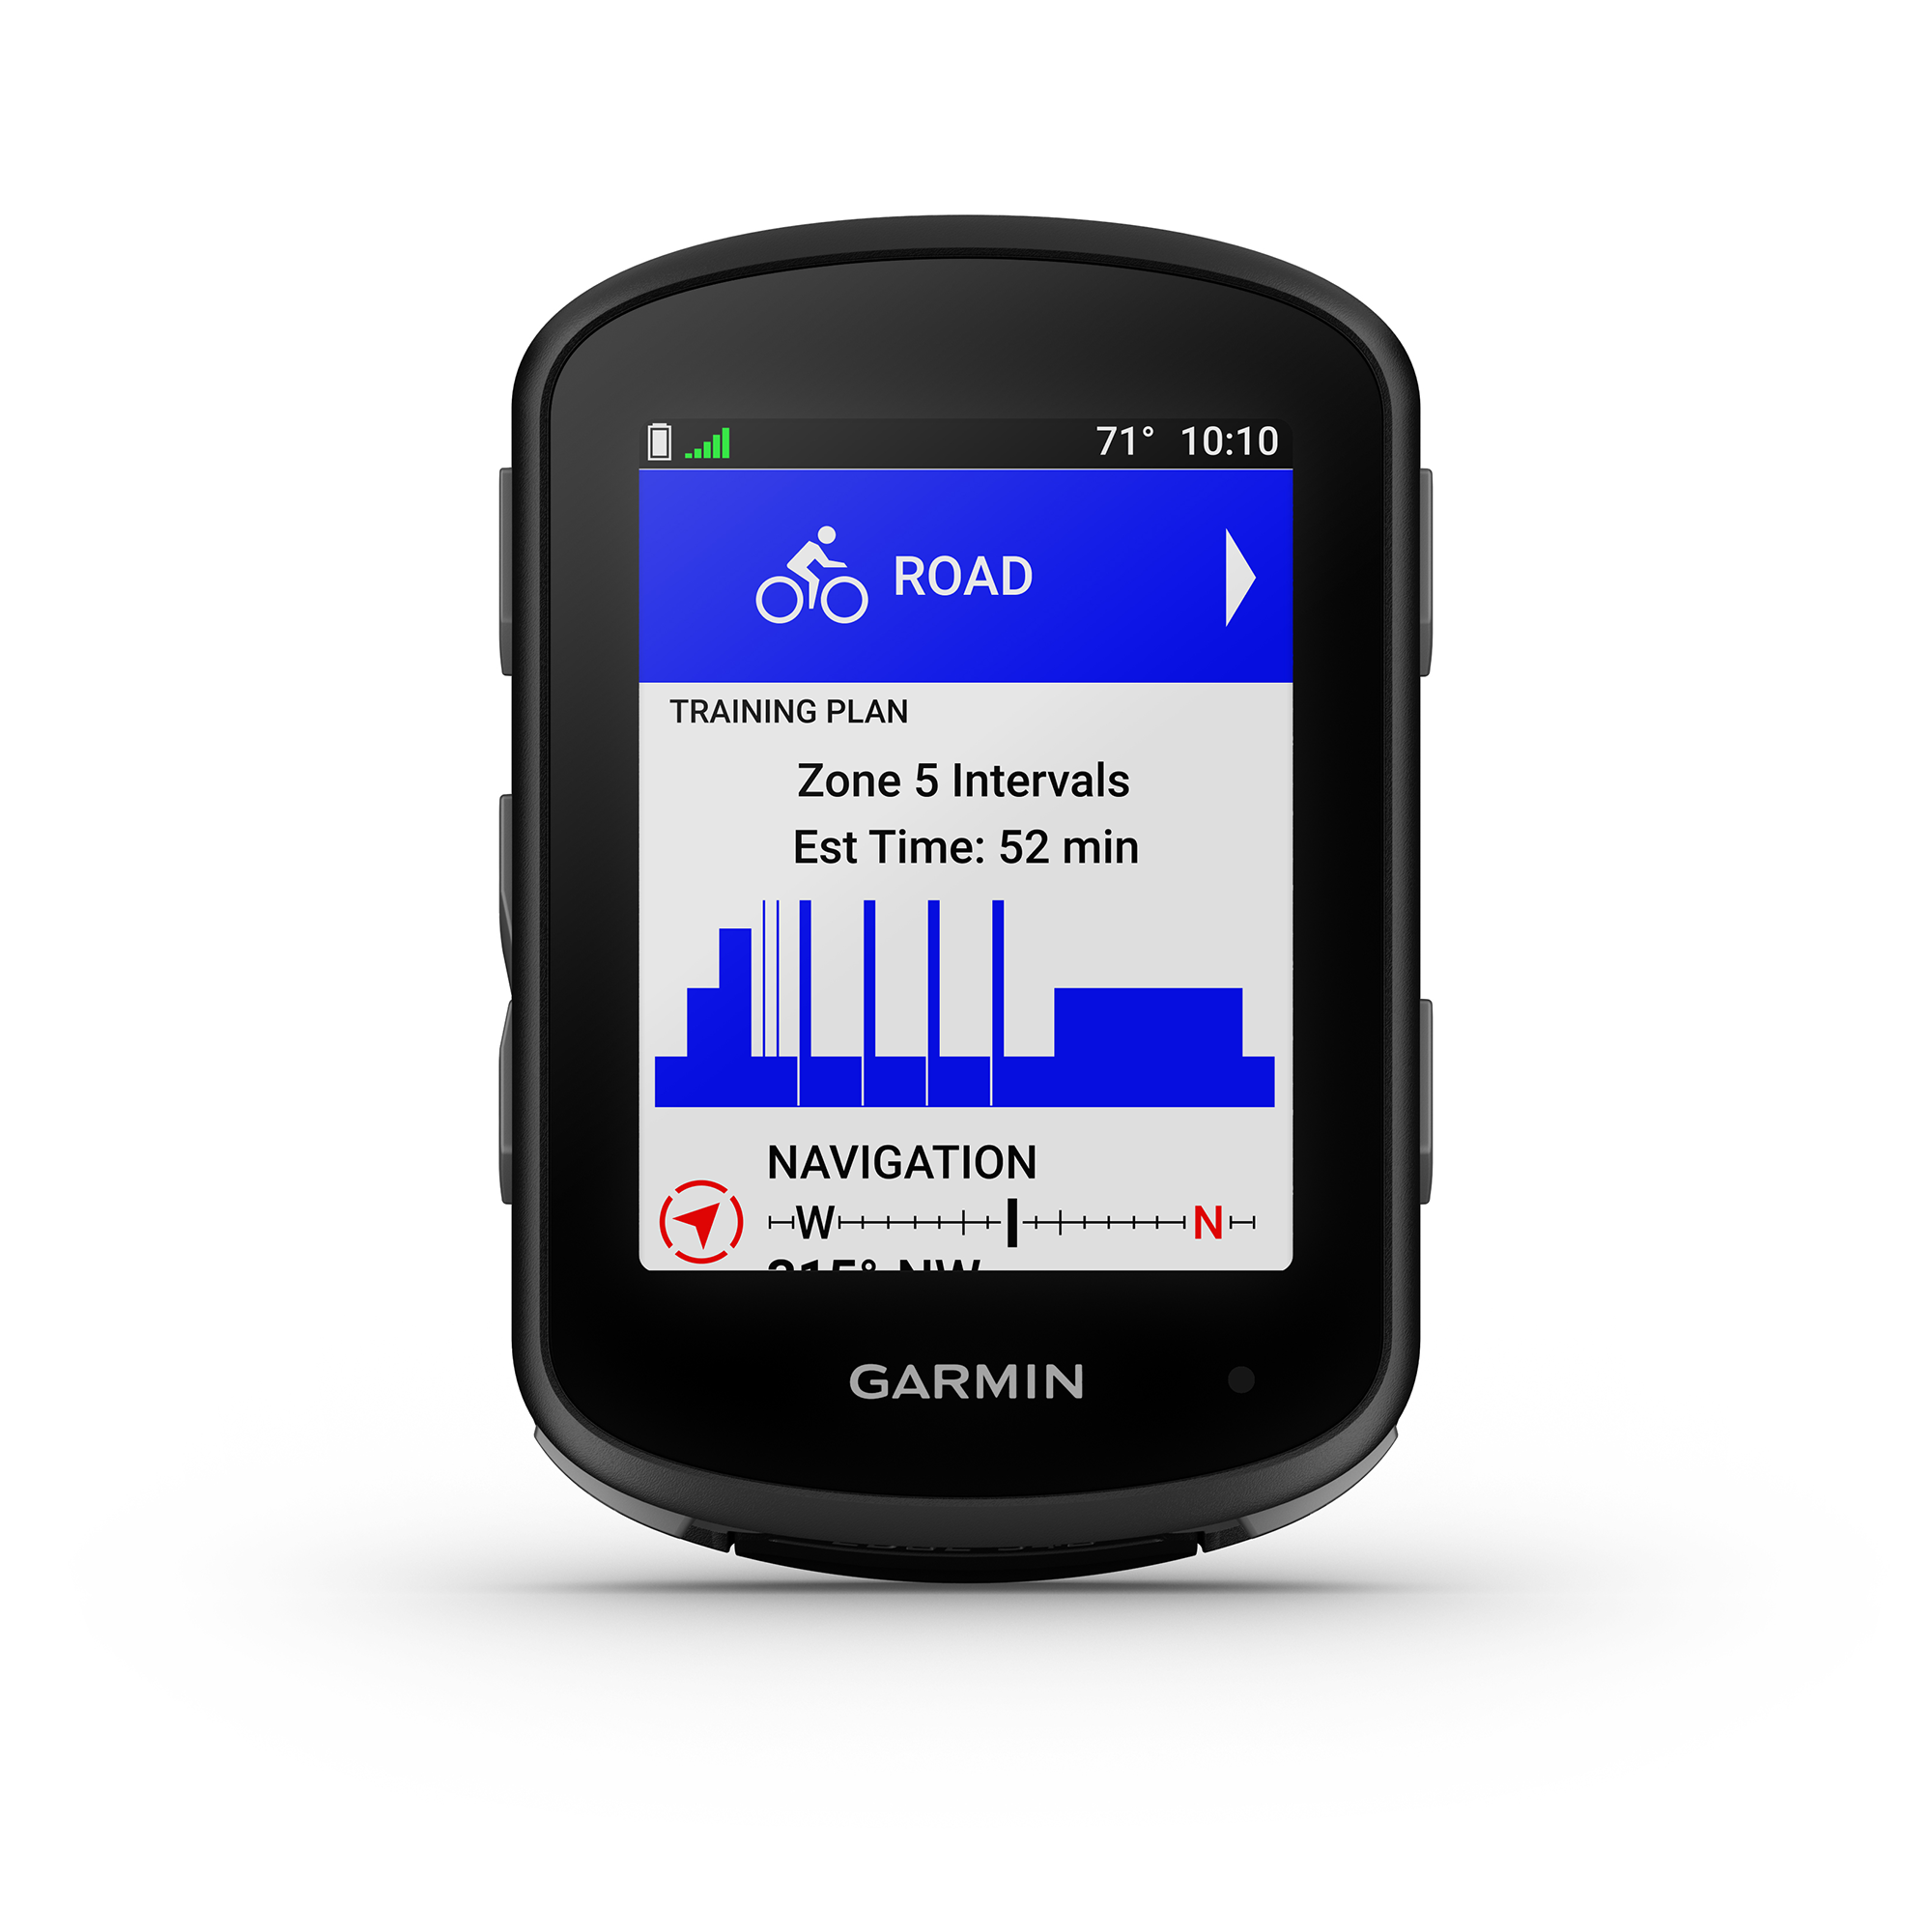 Discover the Garmin Edge 540 and 840 GPS